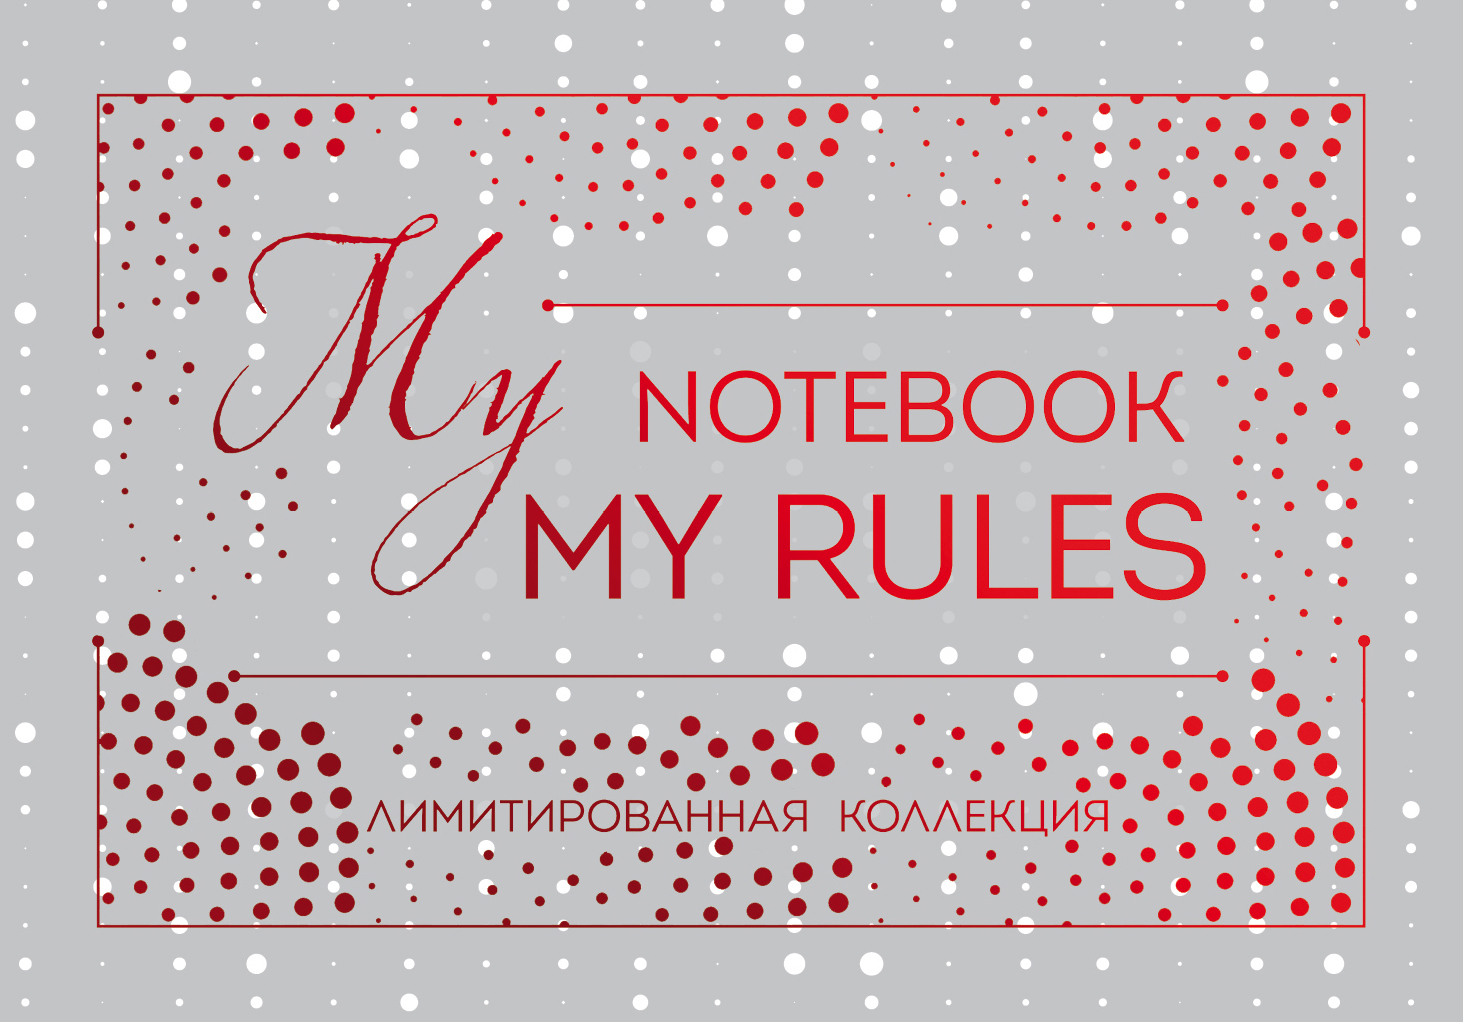 Блокнот My Notebook My Rules (красный)